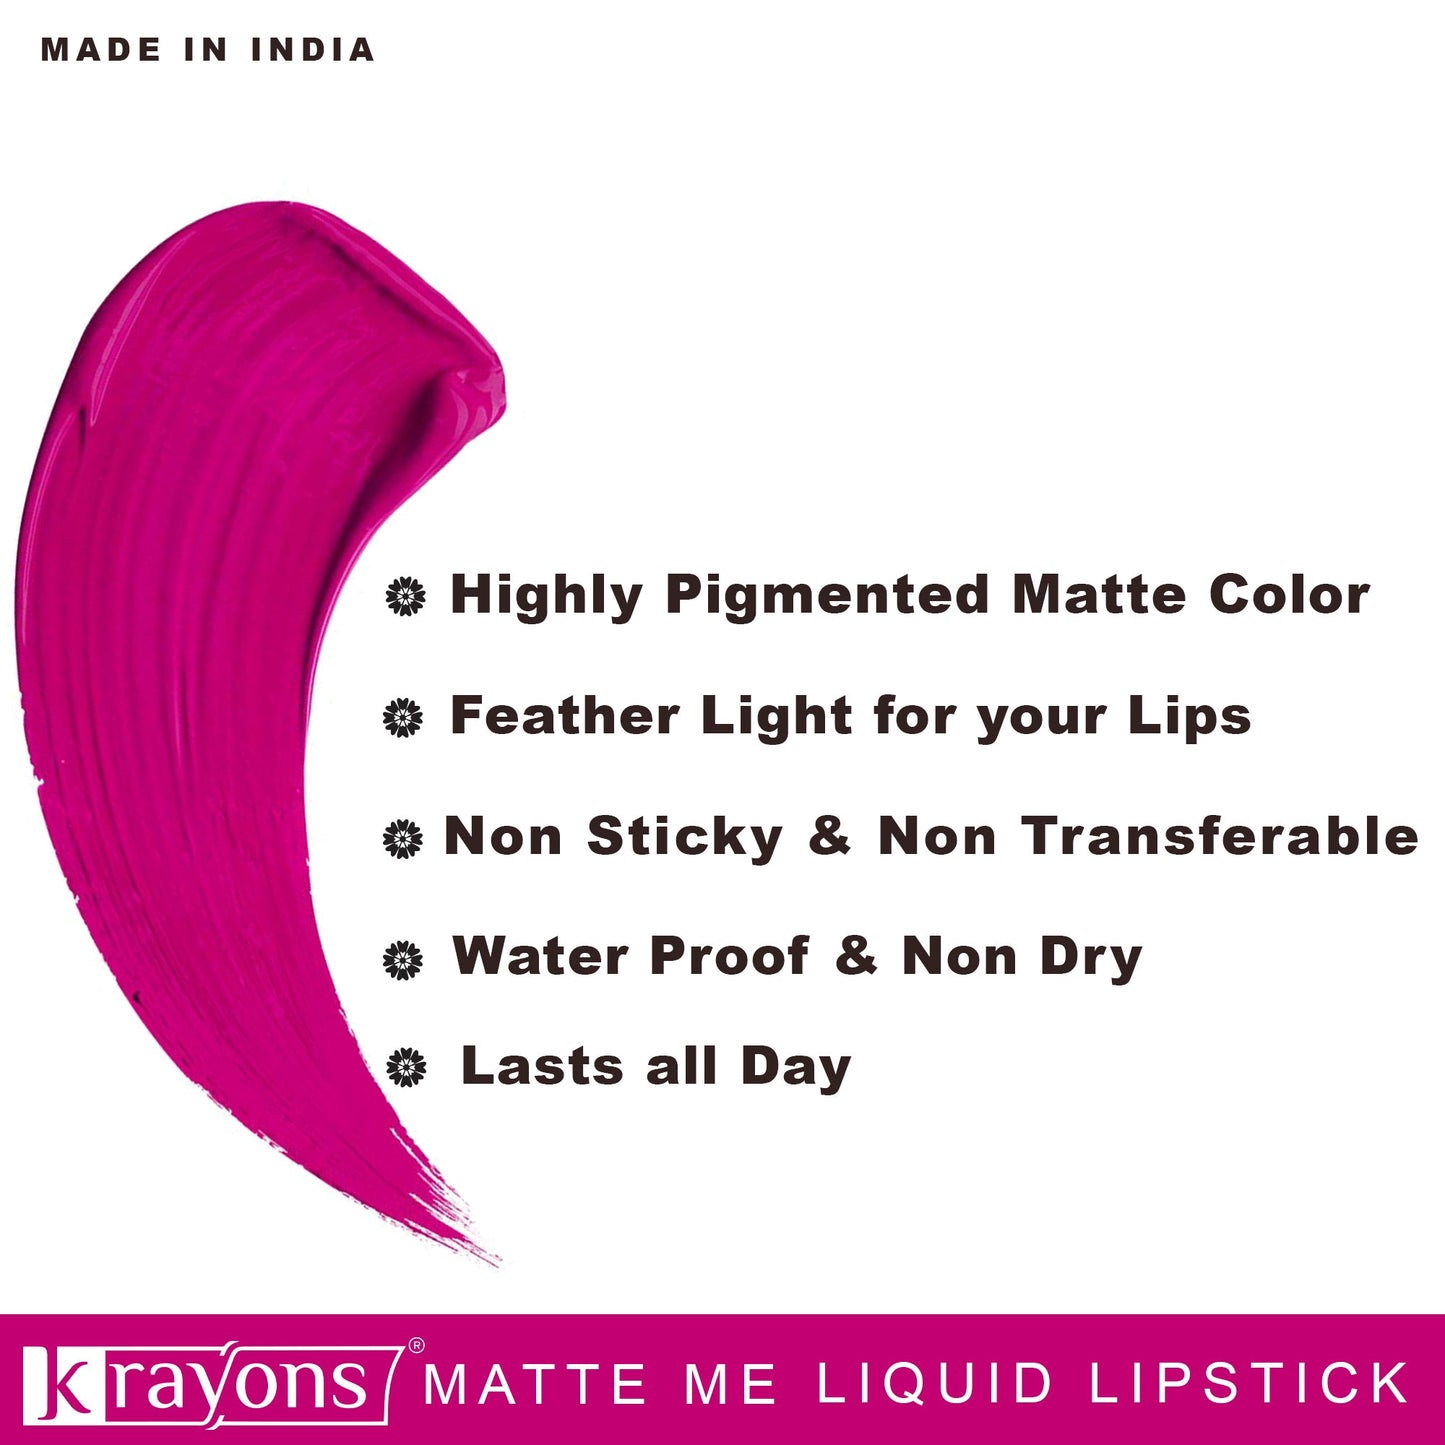 Krayons Matte Me Ultra Smooth Matte Liquid Lip Color, Mask Proof, Waterproof, Longlasting, 5ml Each, Combo, Pack of 2 (Pink Fever, Hyper Orange)